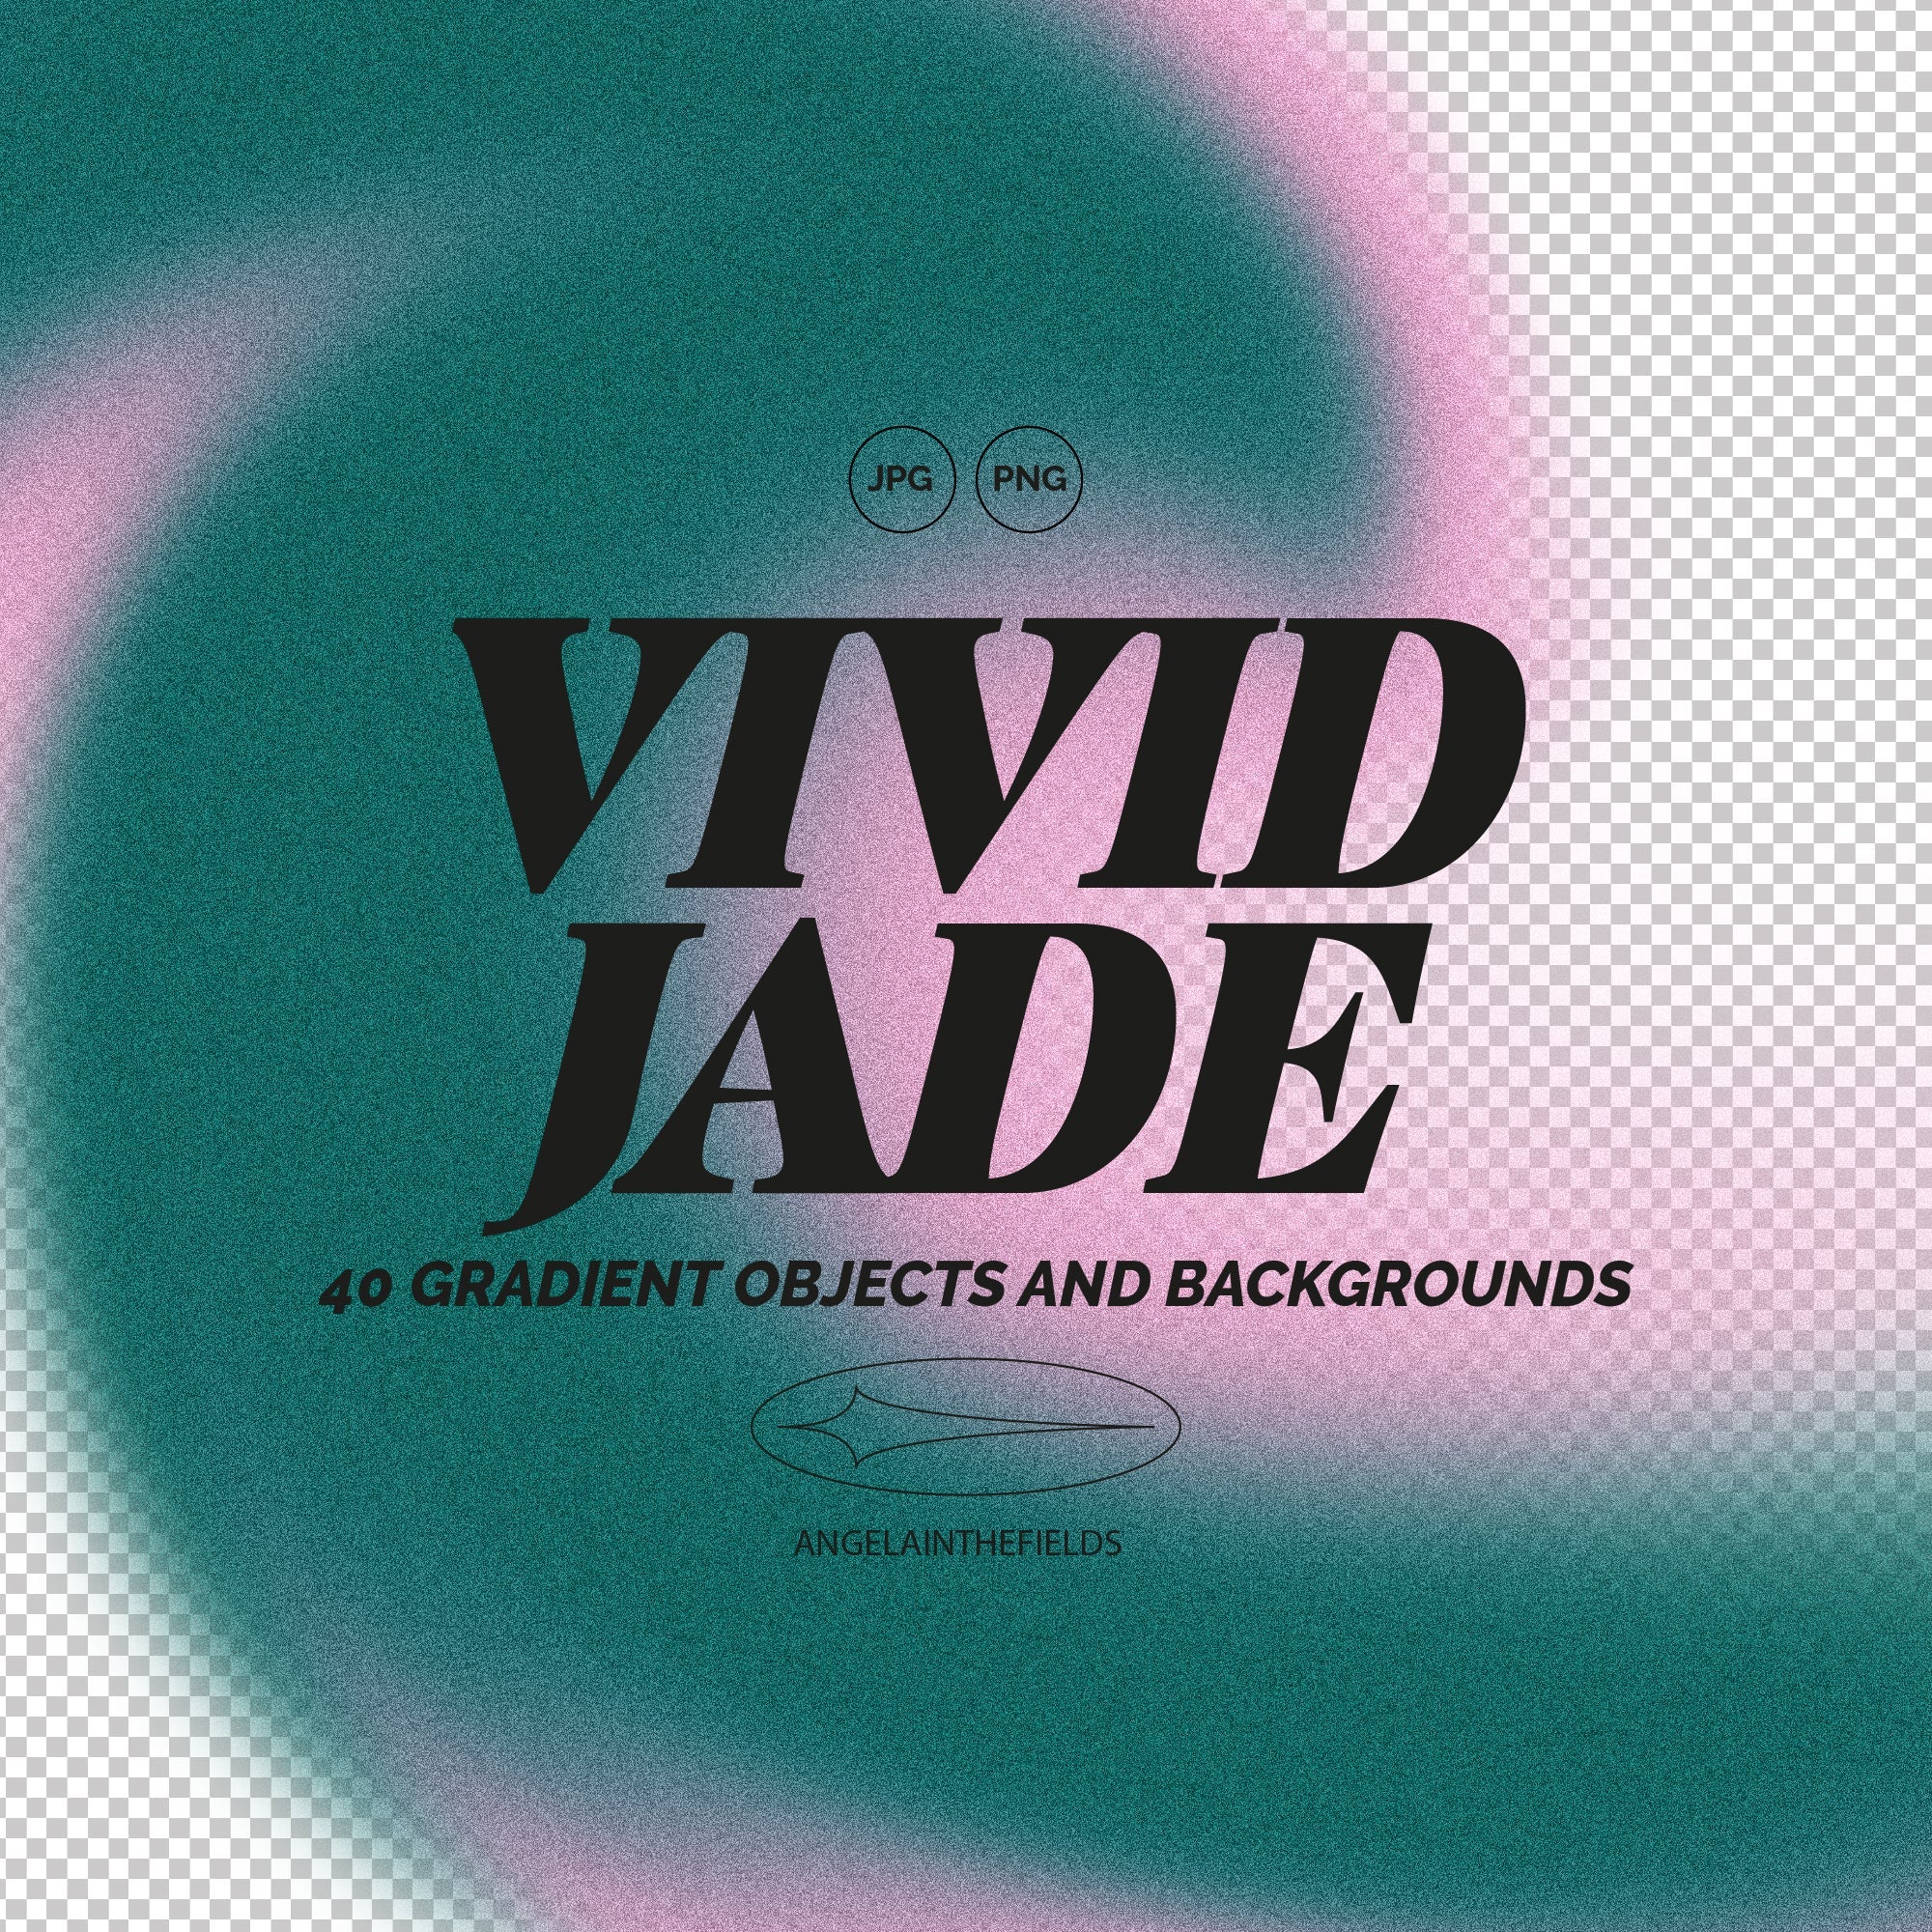 VIVID JADE Gradient Set